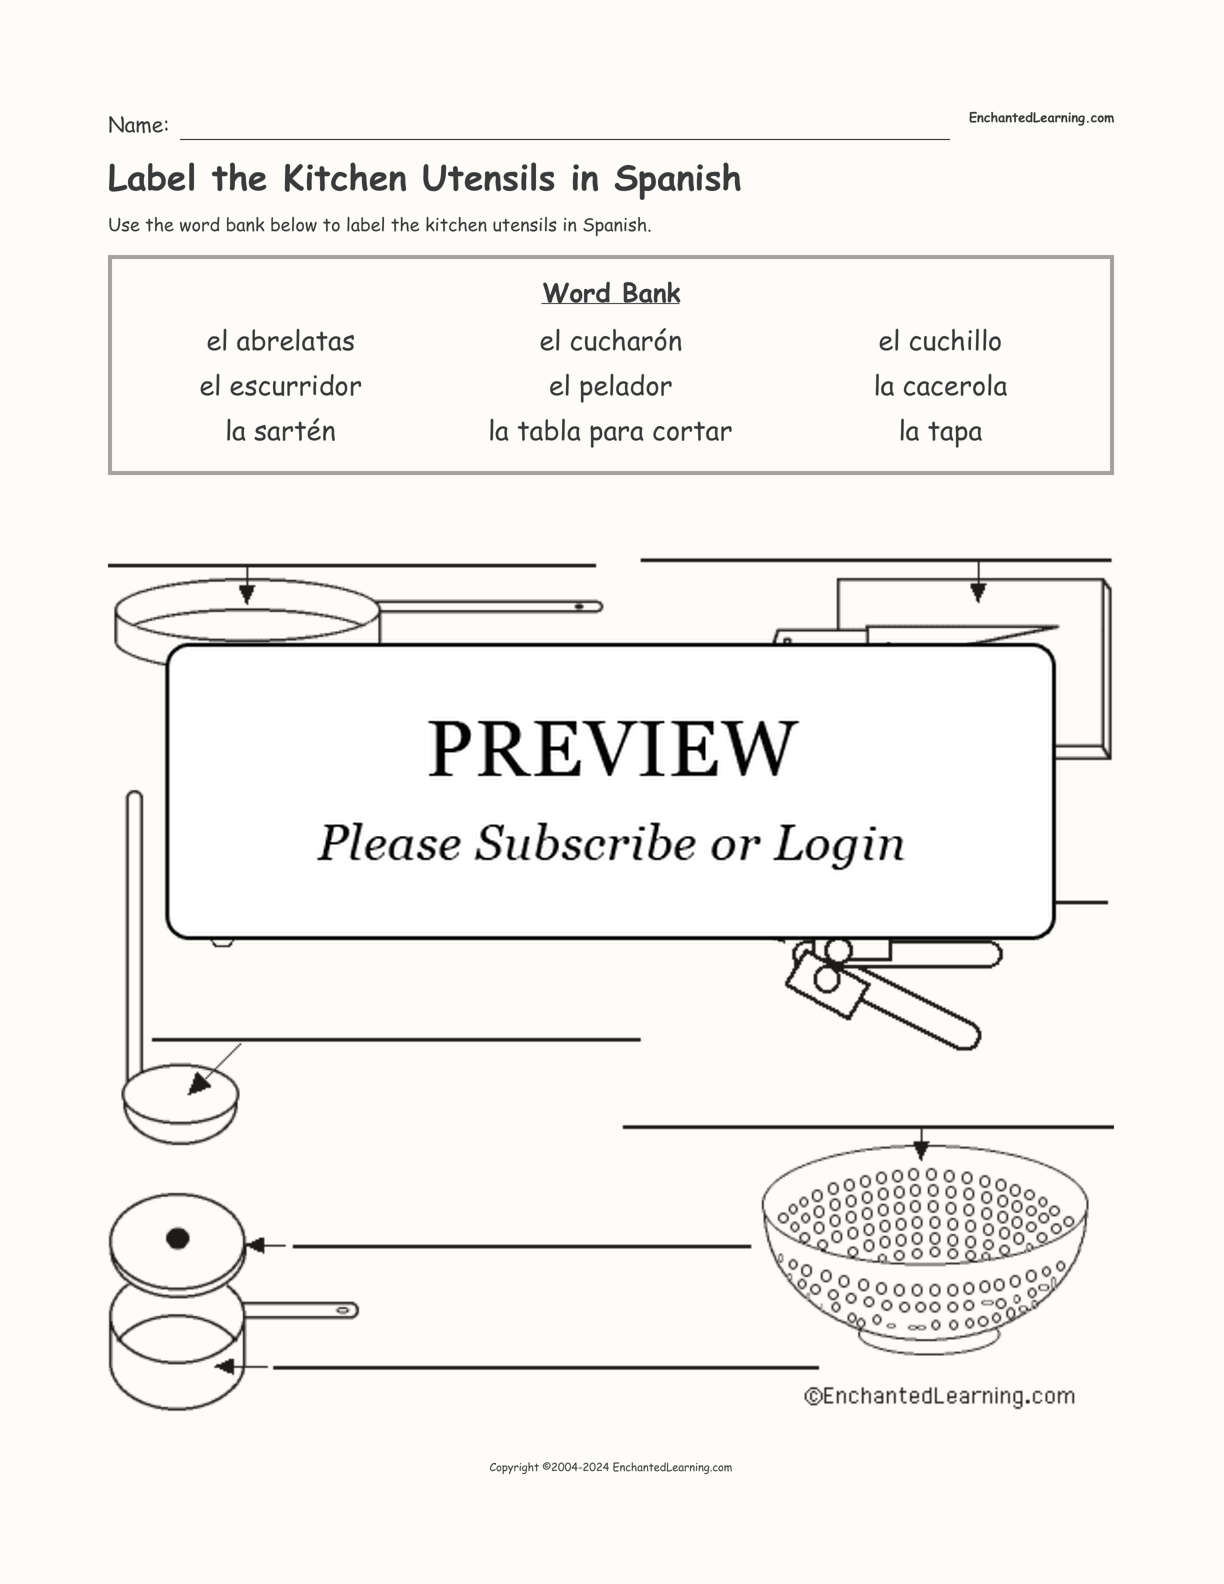 Label the Kitchen Utensils in Spanish interactive worksheet page 1